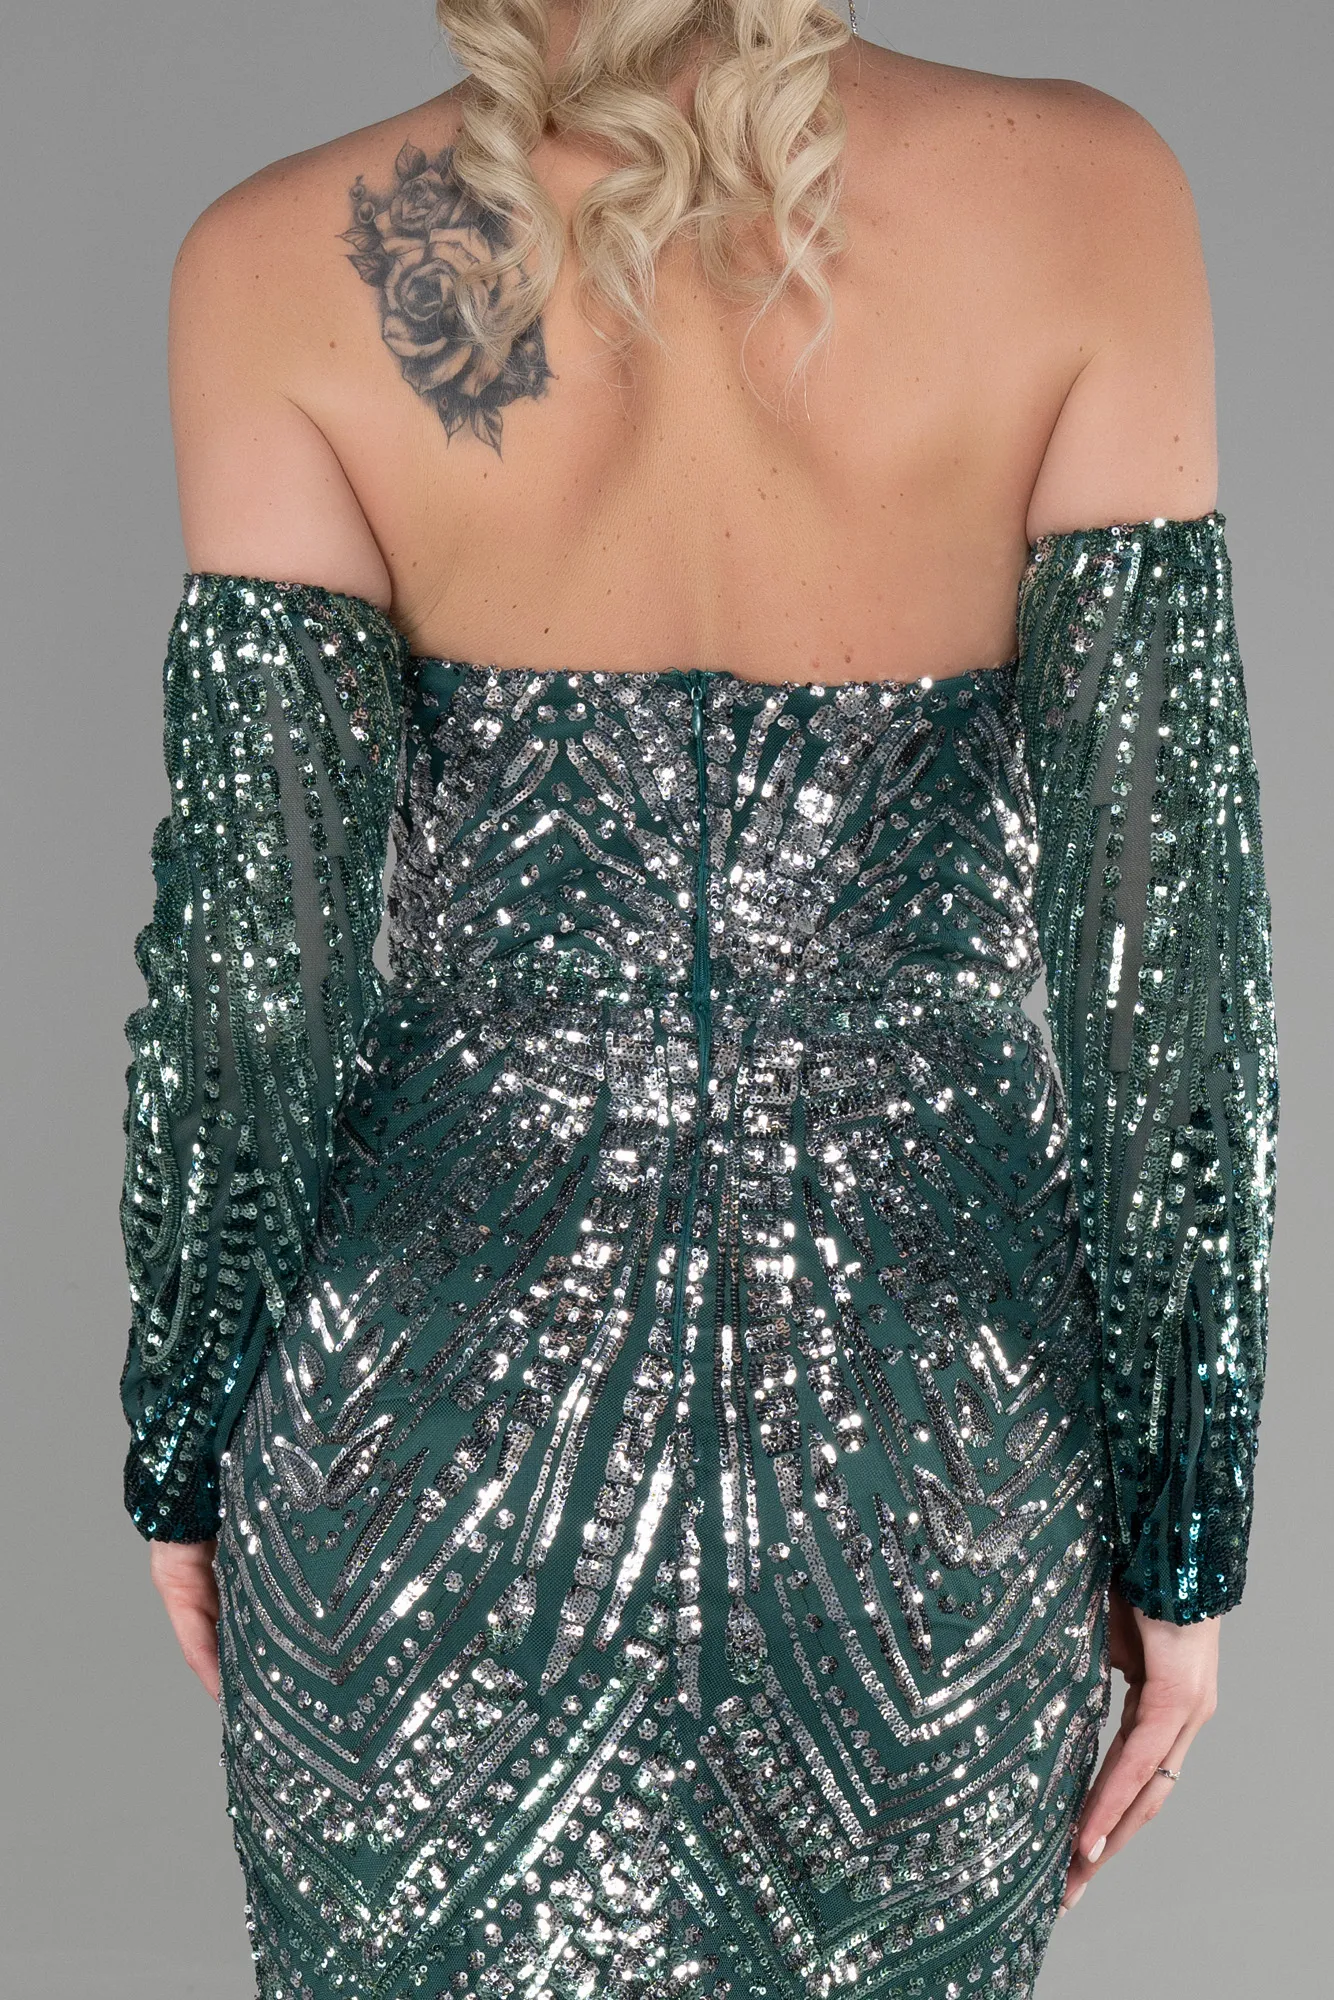 Emerald Green-Long Mermaid Prom Dress ABU3396